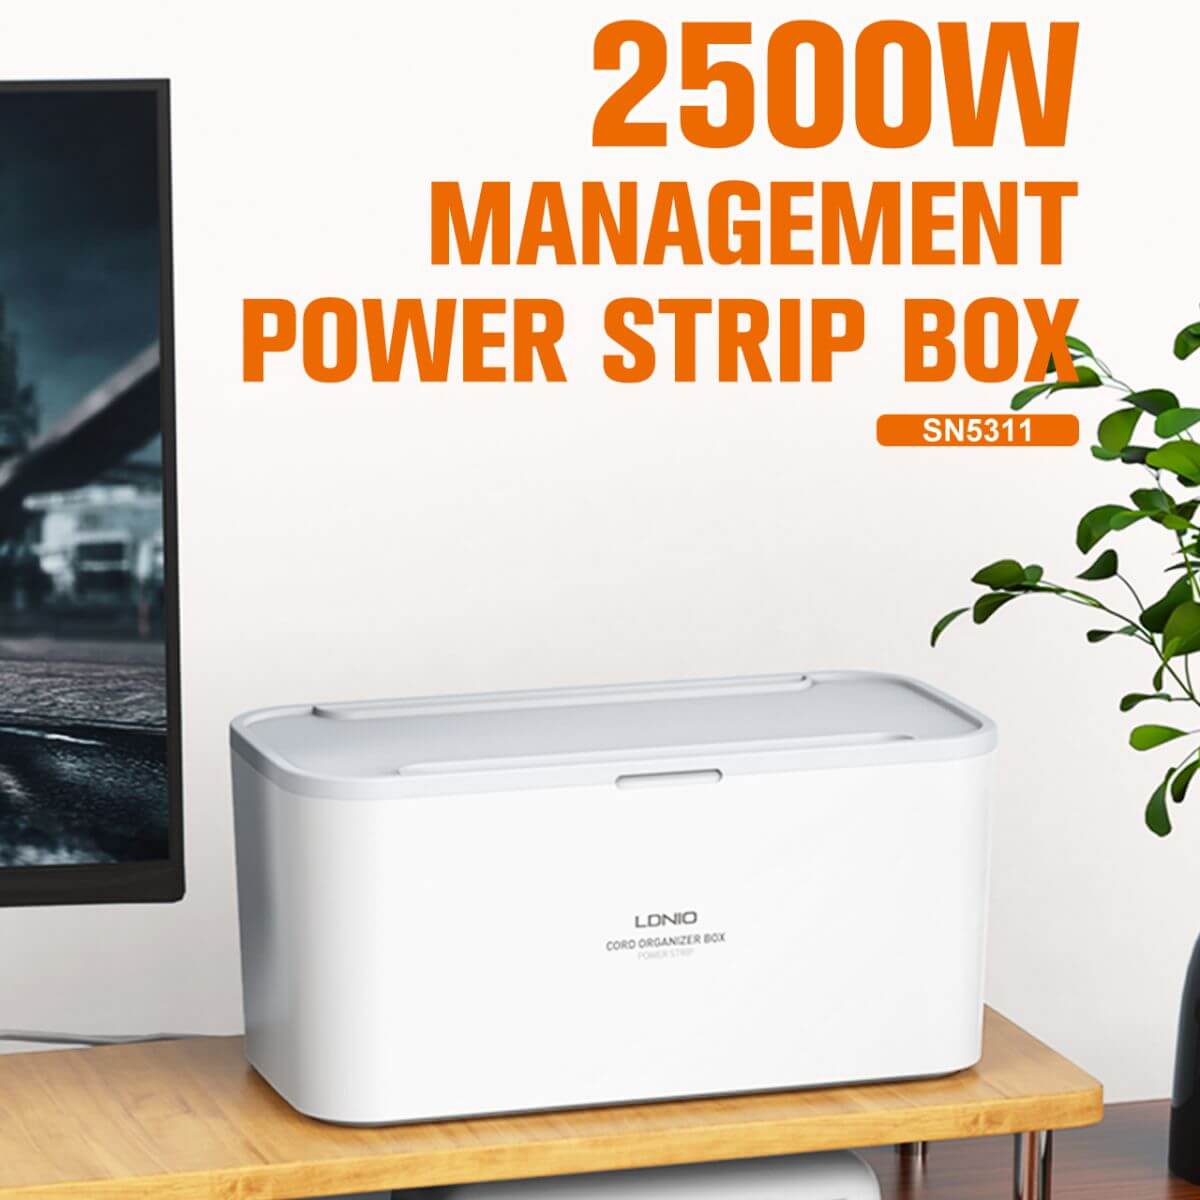 LDNIO 2500W Management Power Strip Box SN5311 - Hugmie